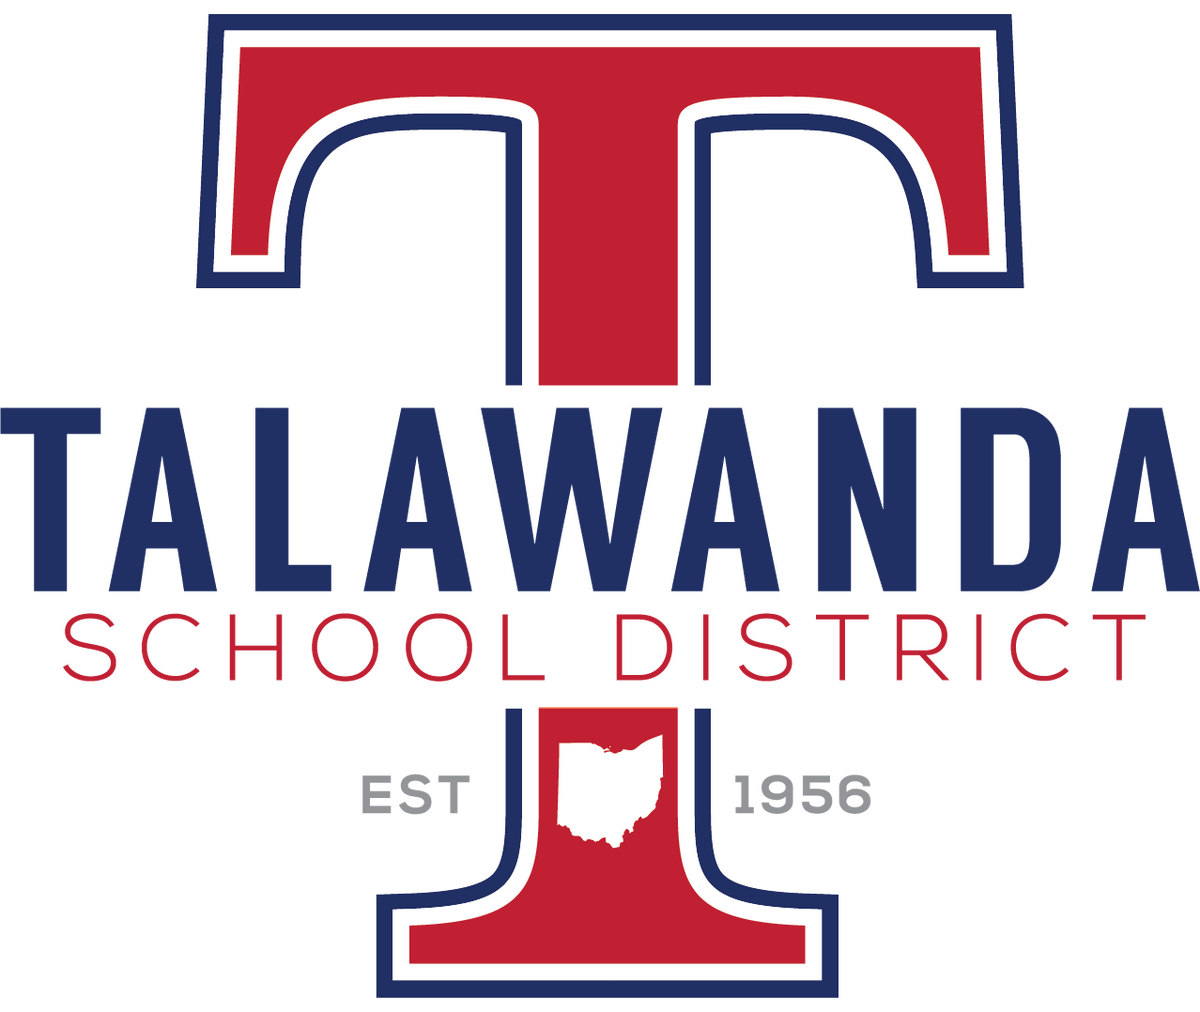 Talawanda School District logo